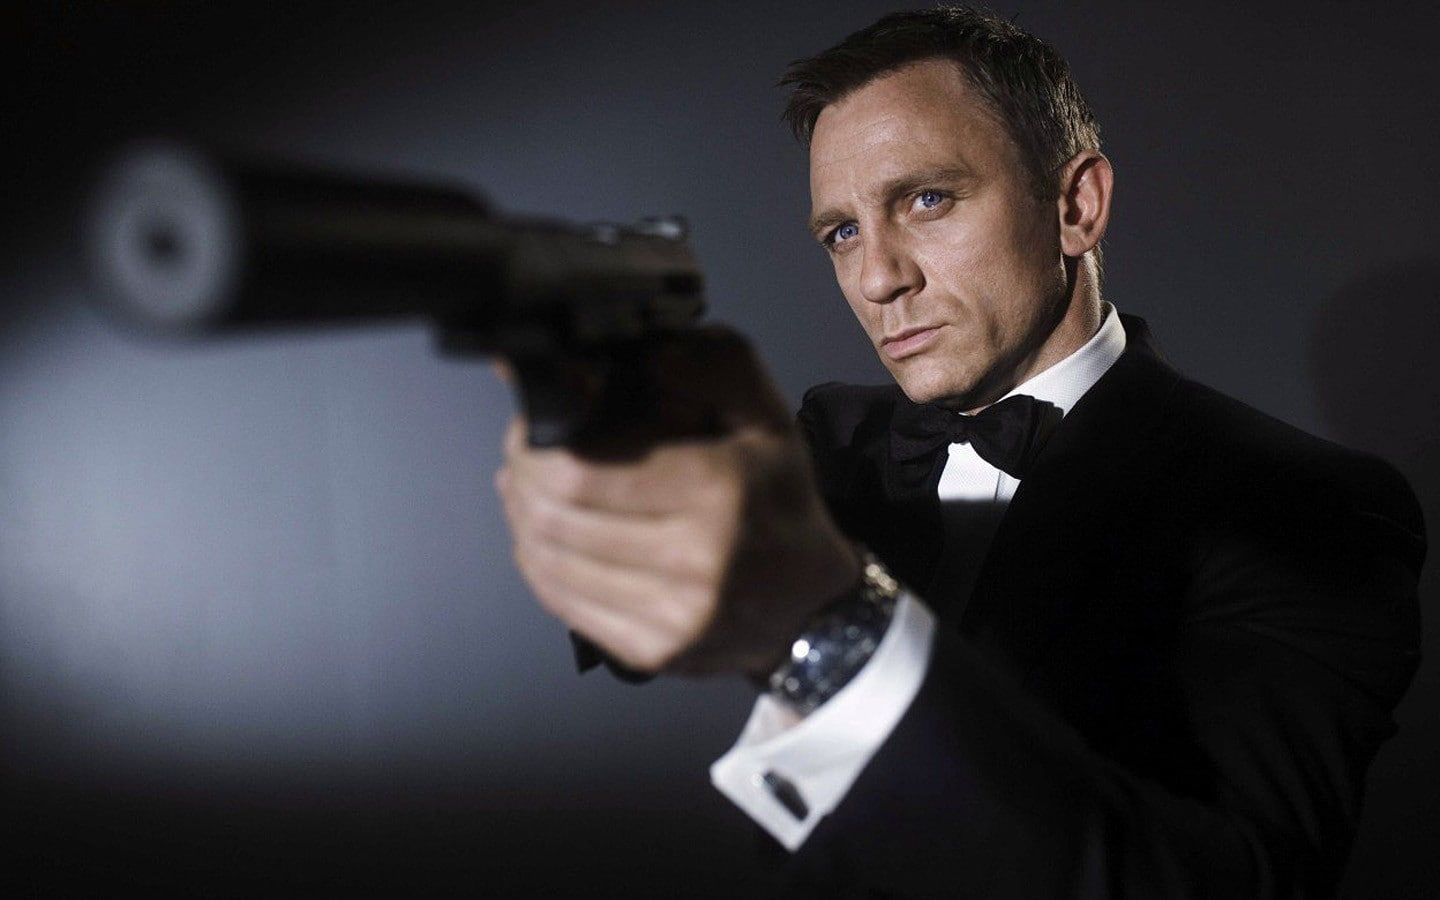 Daniel Craig plays the role of James Bond